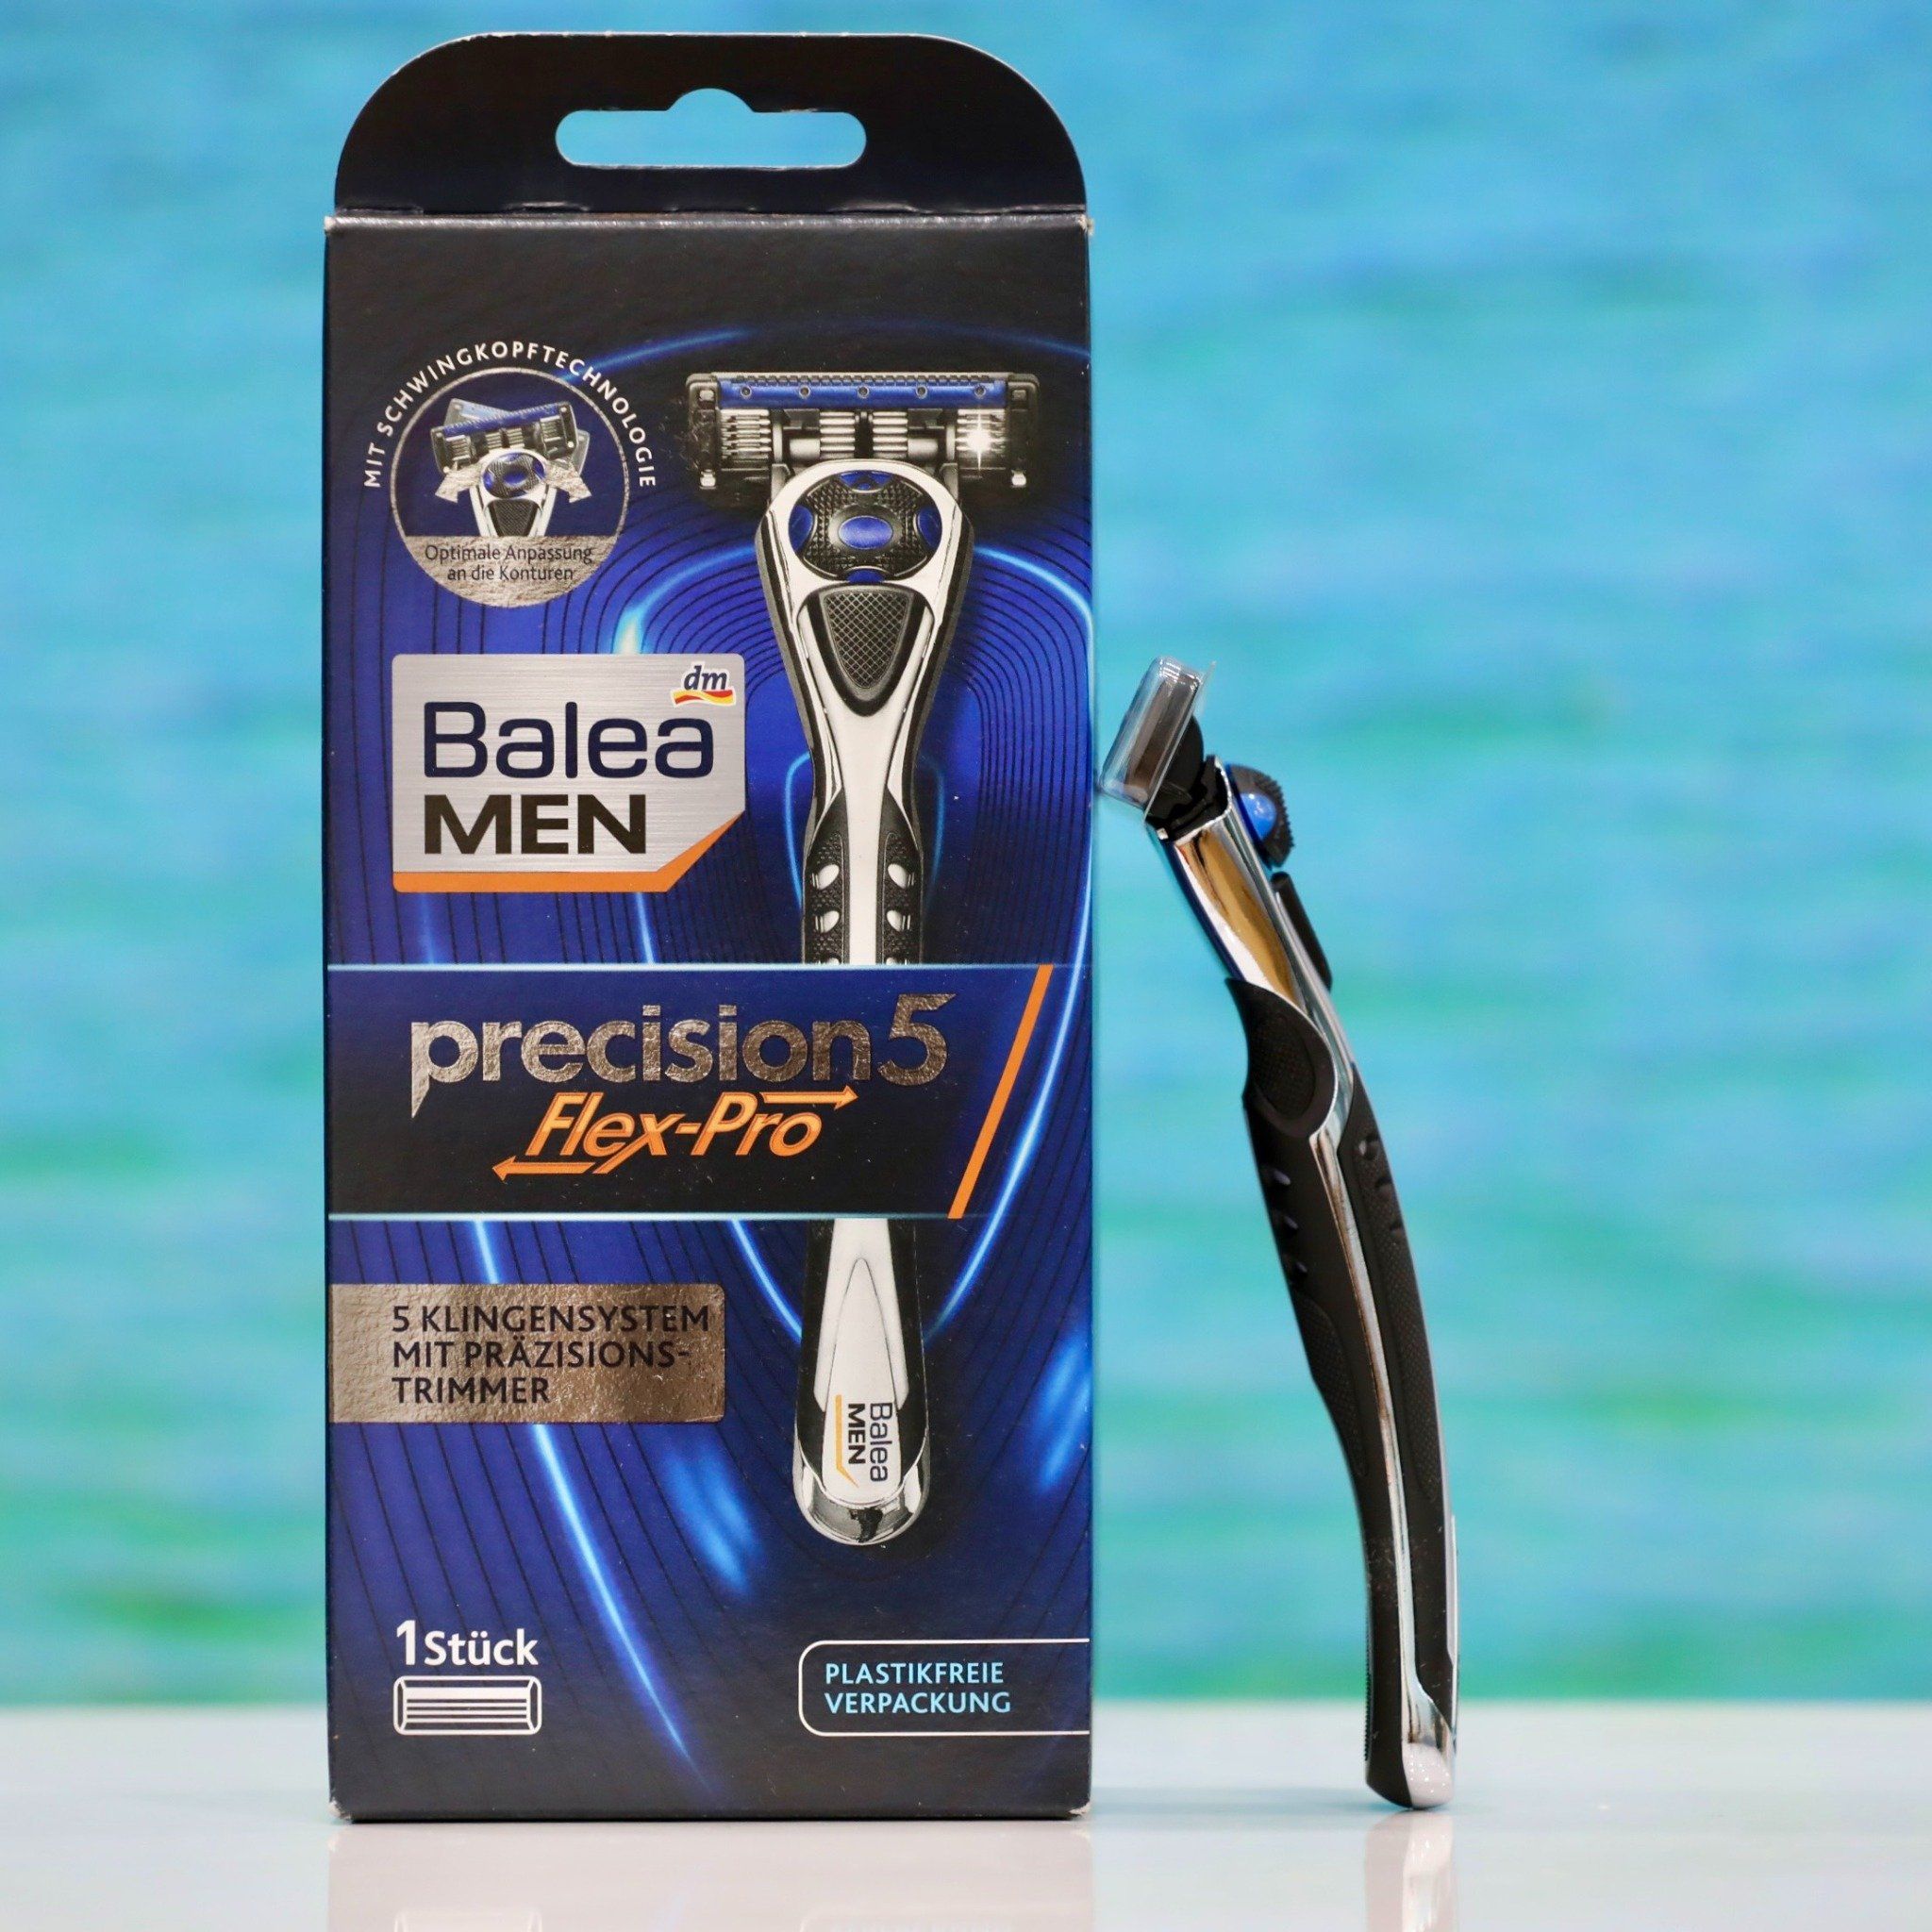  Dao cạo râu Balea MEN precision5 Flex Pro Shaver 